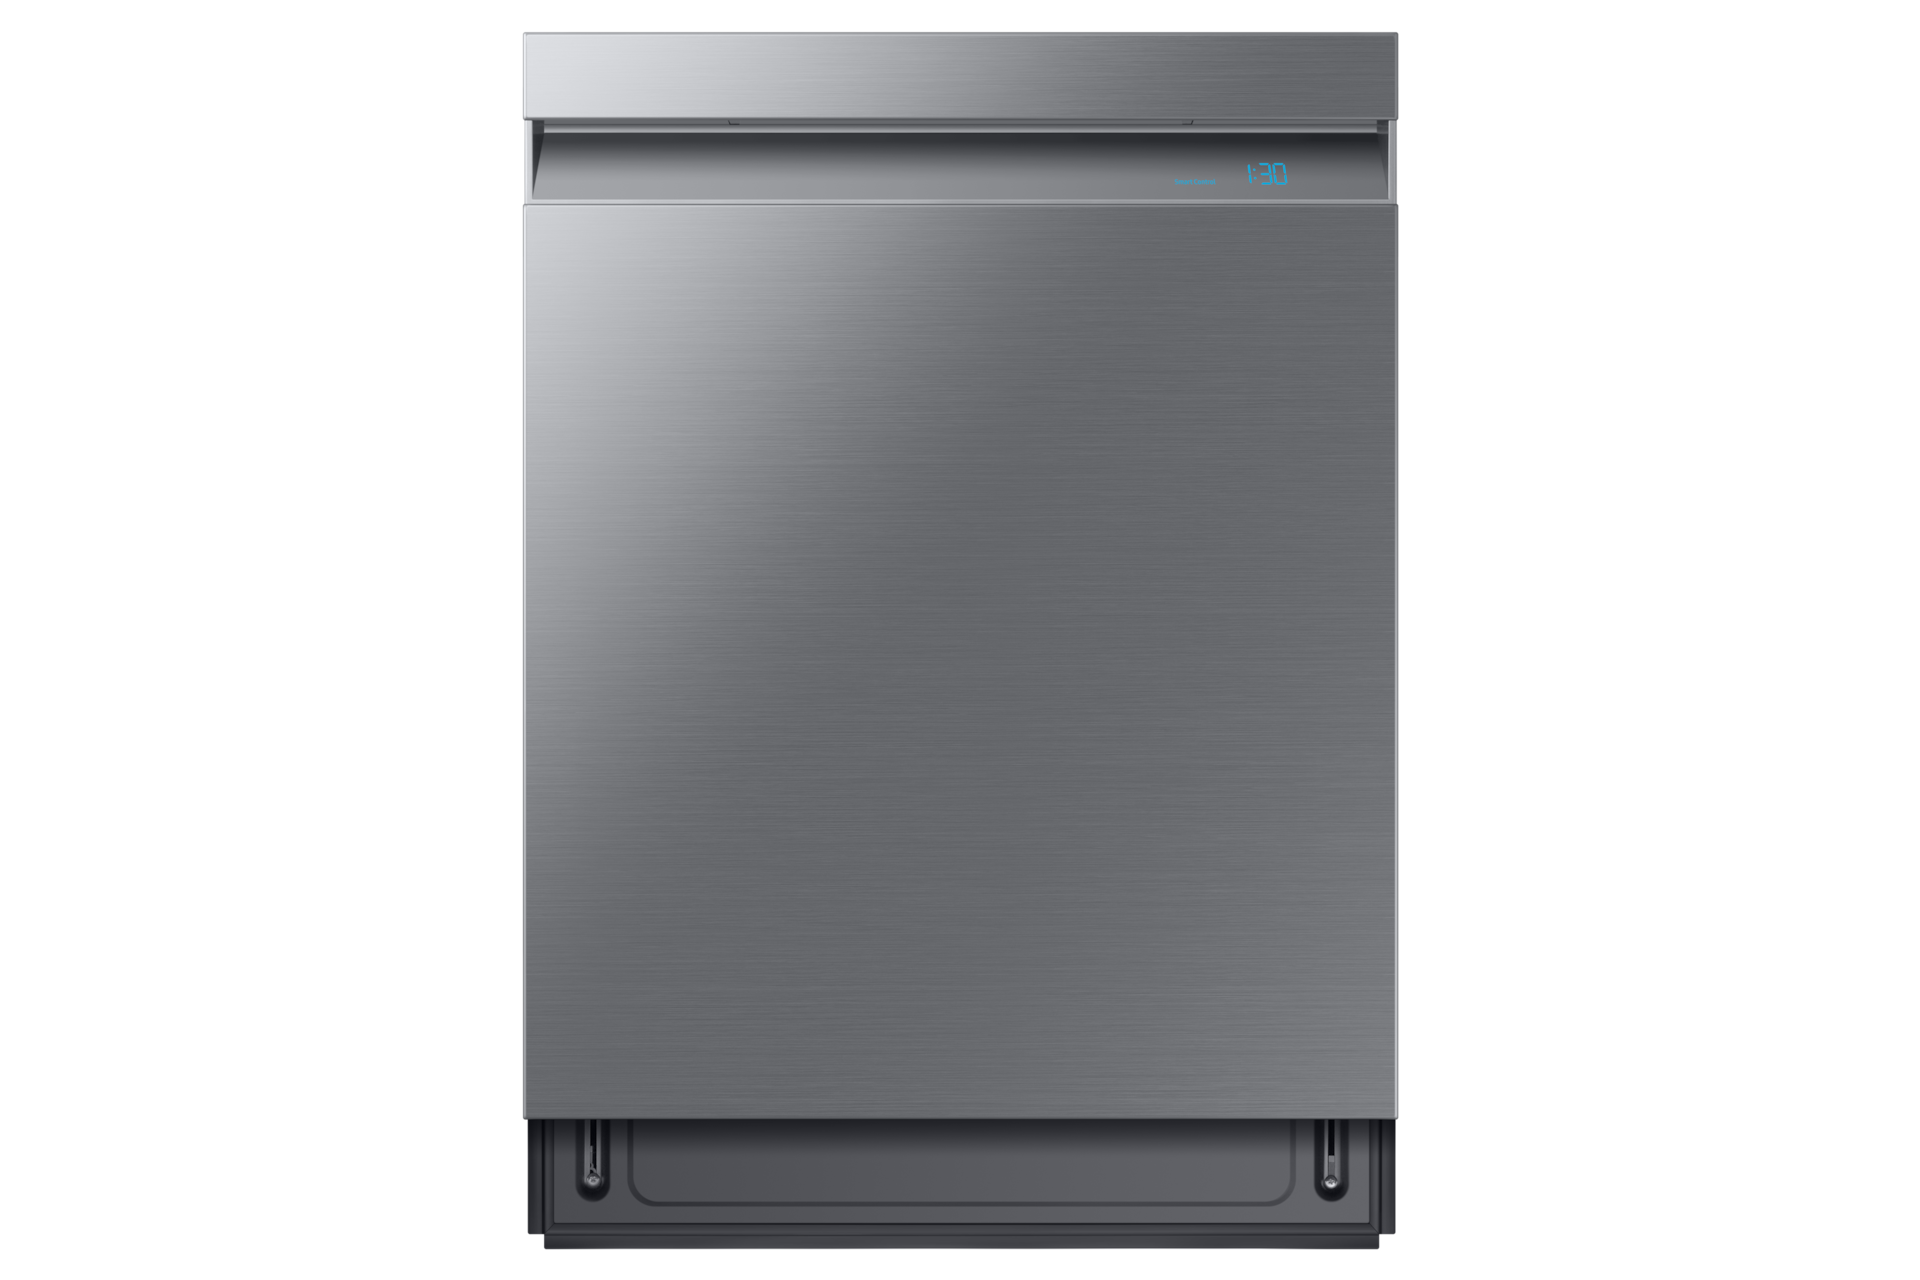 SAMSUNG DW80R9950US Smart Linear Wash 39dBA Dishwasher in Stainless Steel